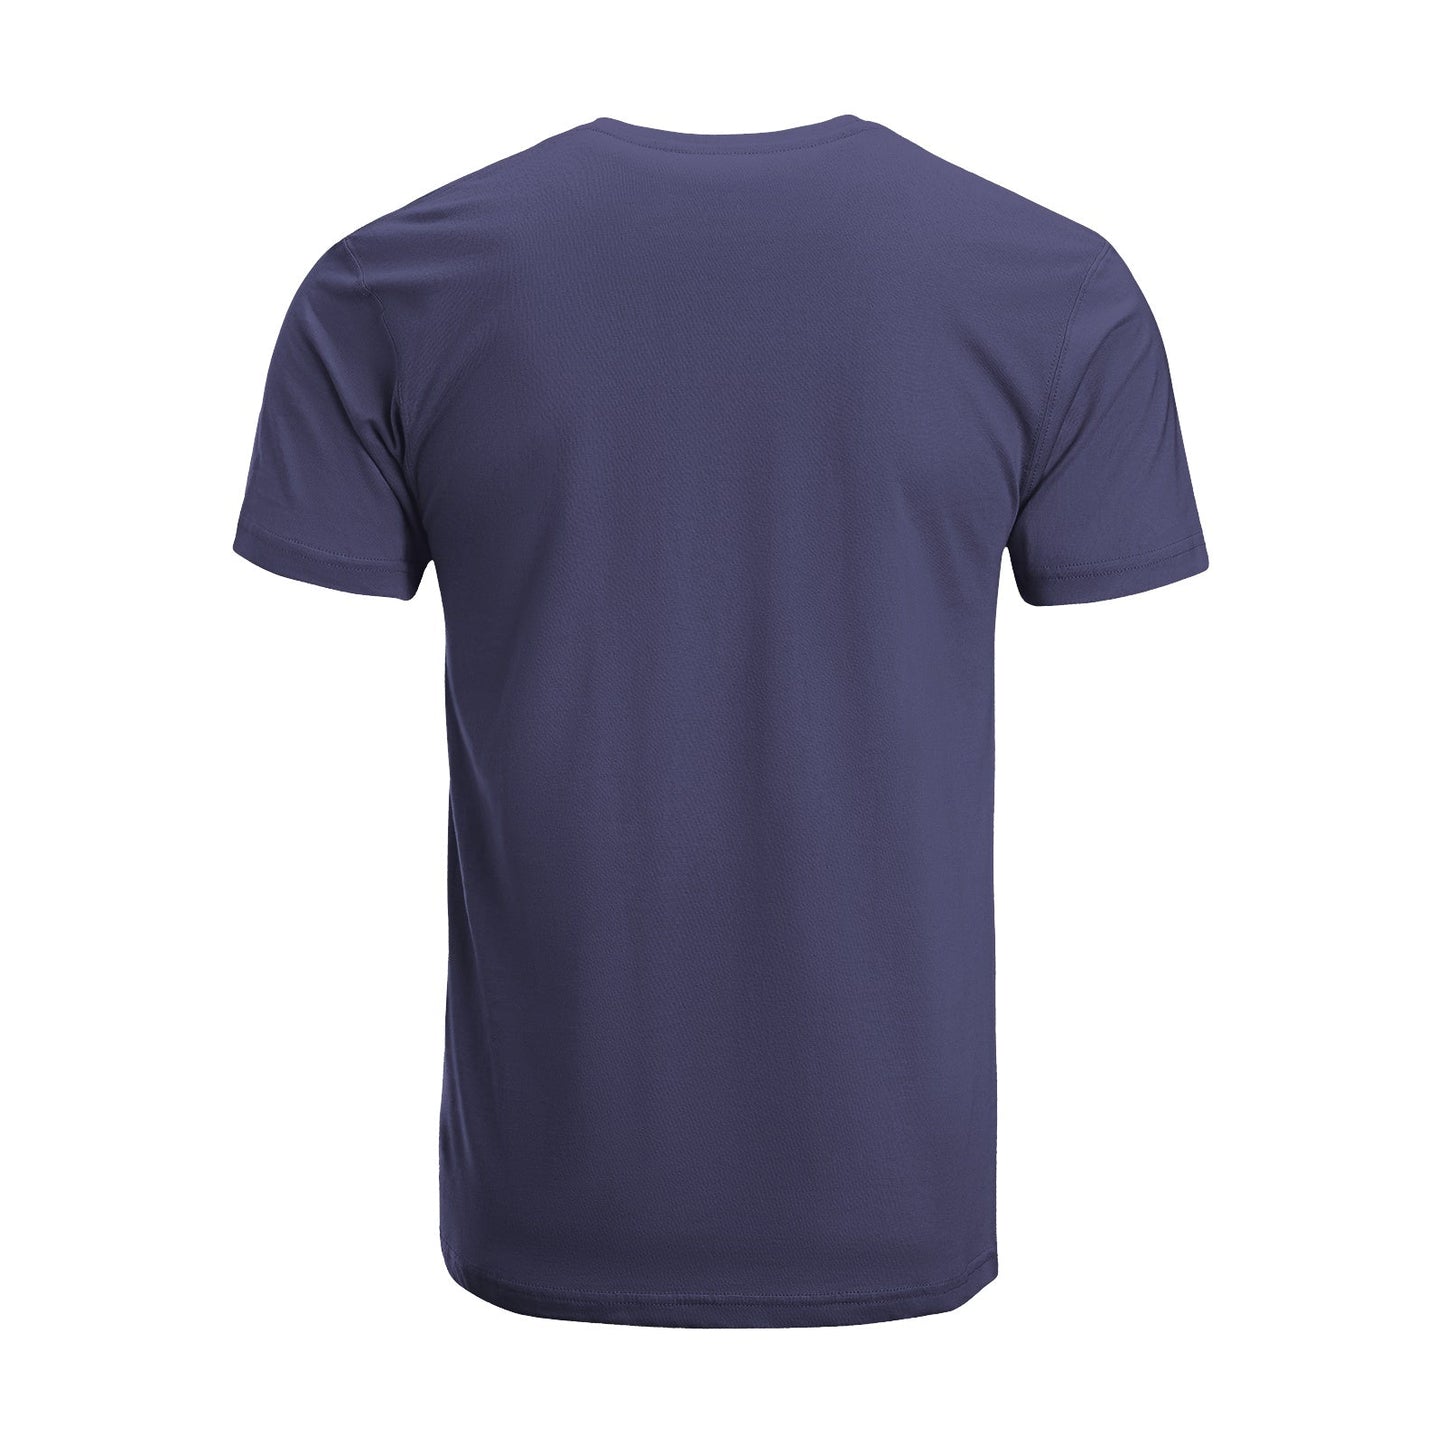 Unisex Short Sleeve Crew Neck Cotton Jersey T-Shirt VEGAN 20